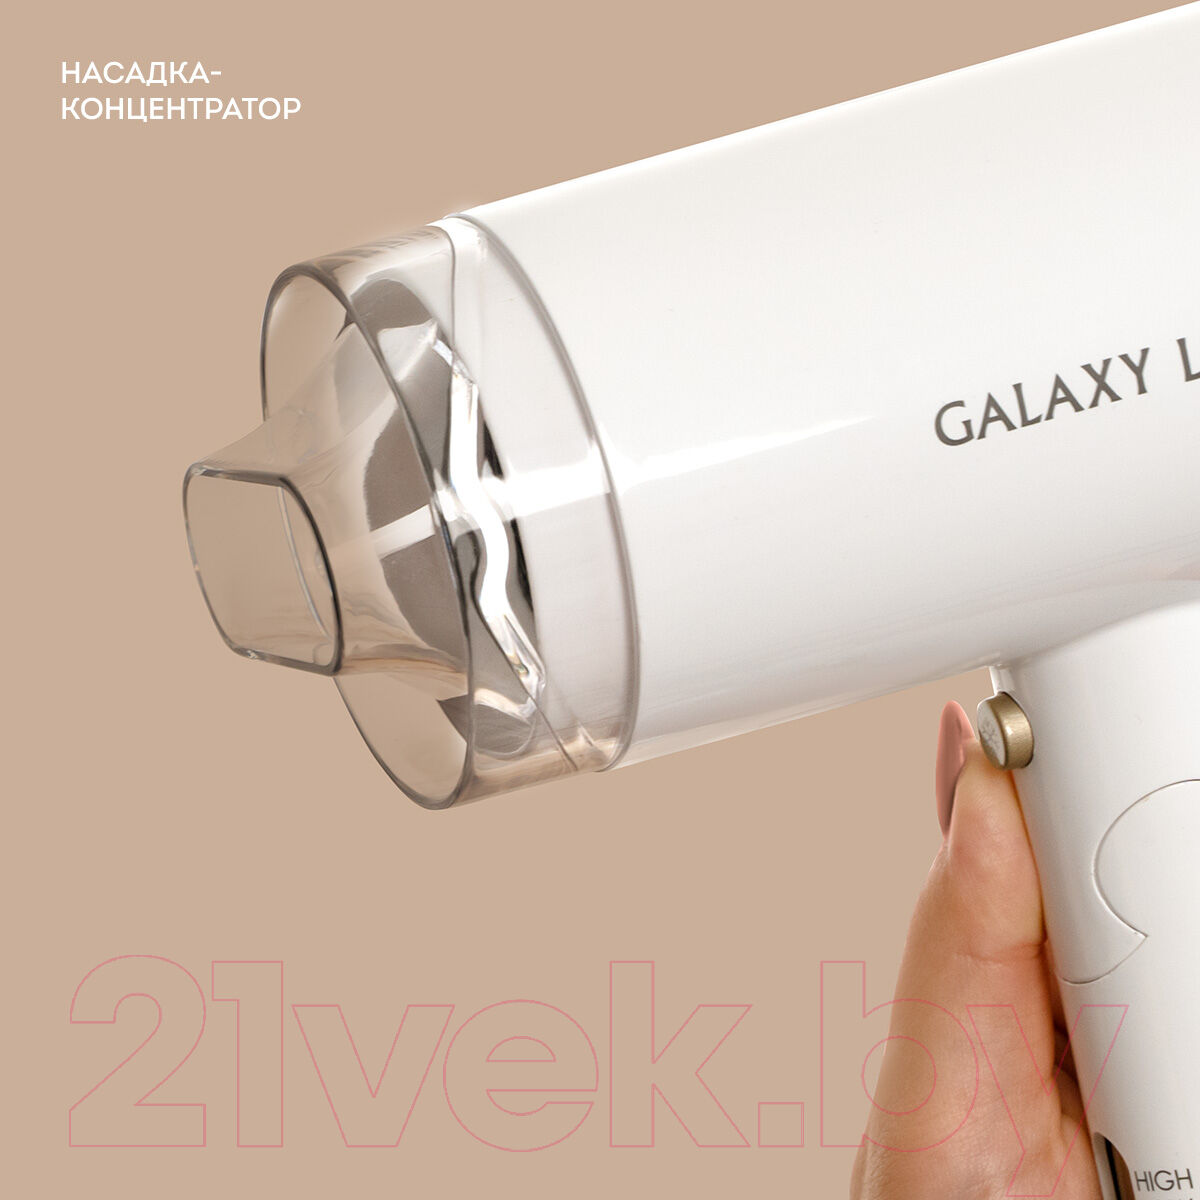 Компактный фен Galaxy GL 4353 9